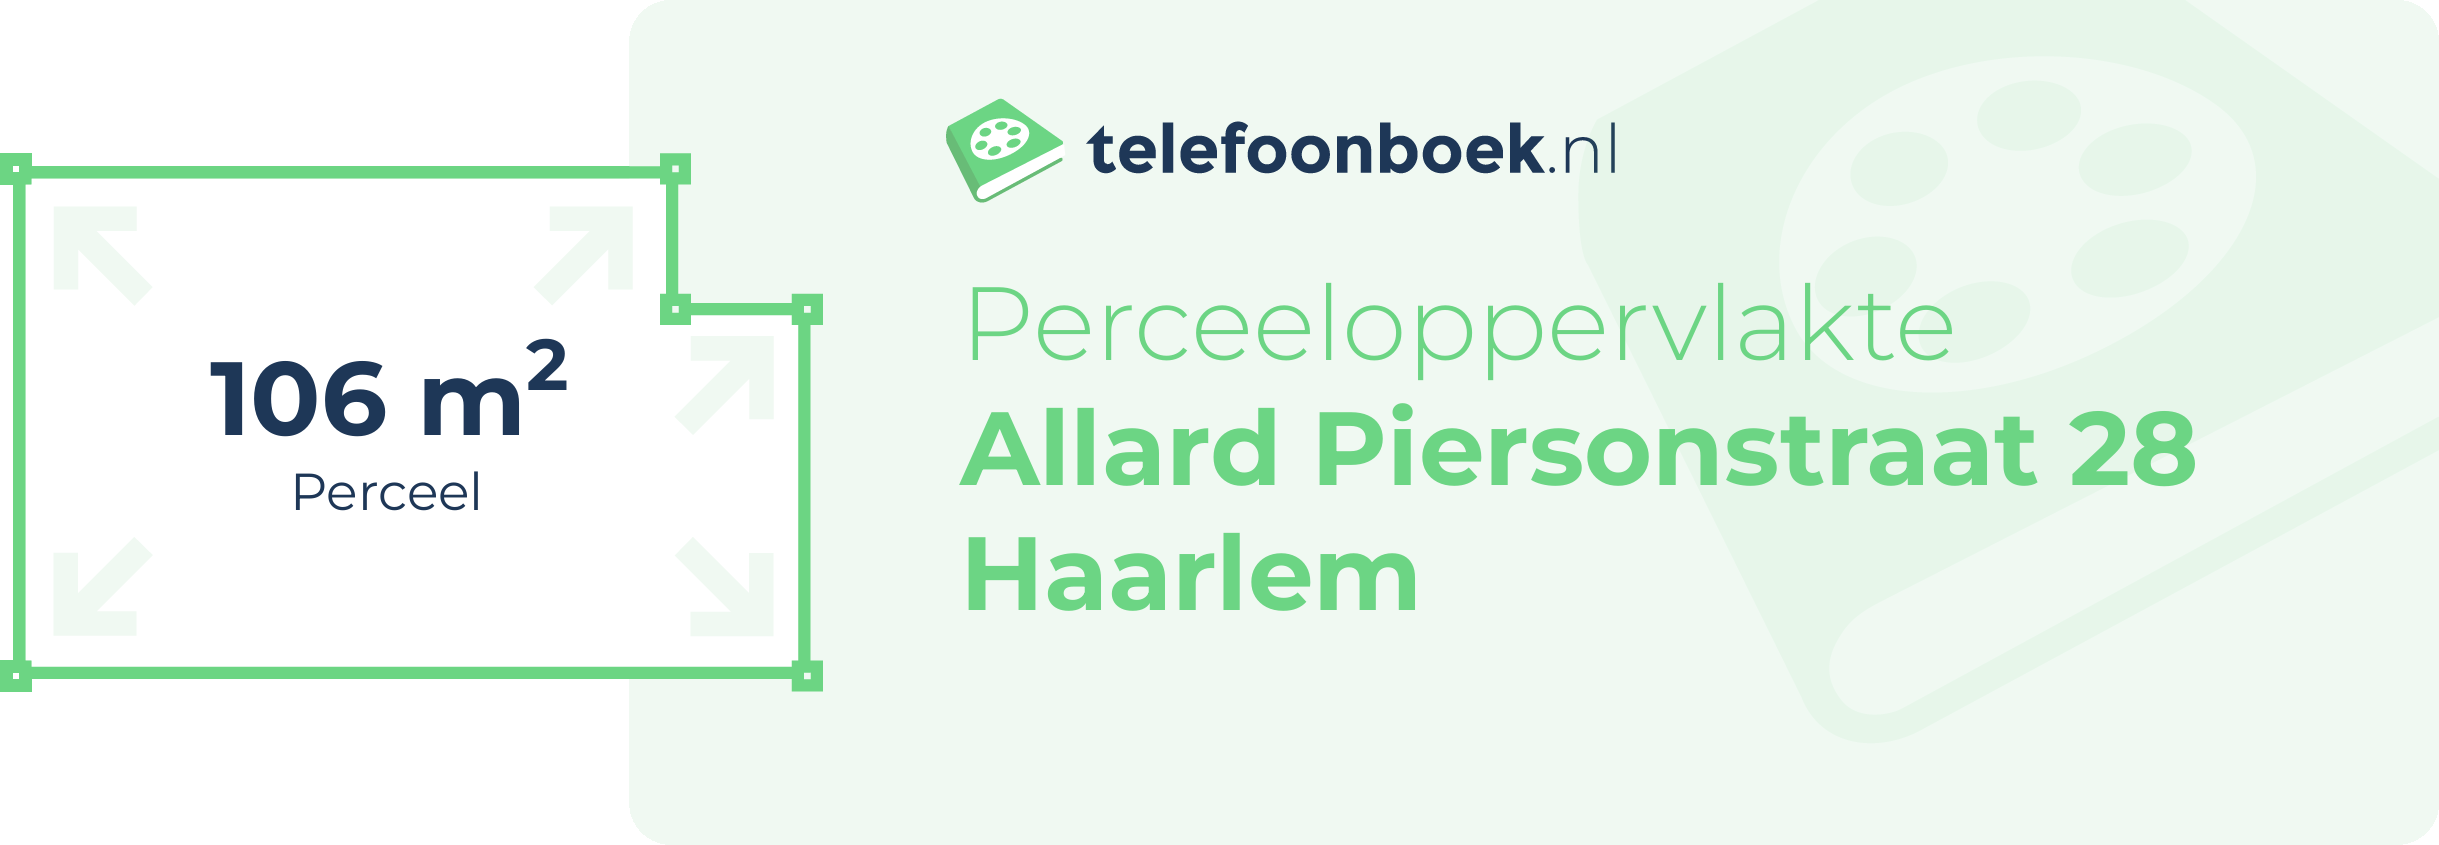 Perceeloppervlakte Allard Piersonstraat 28 Haarlem